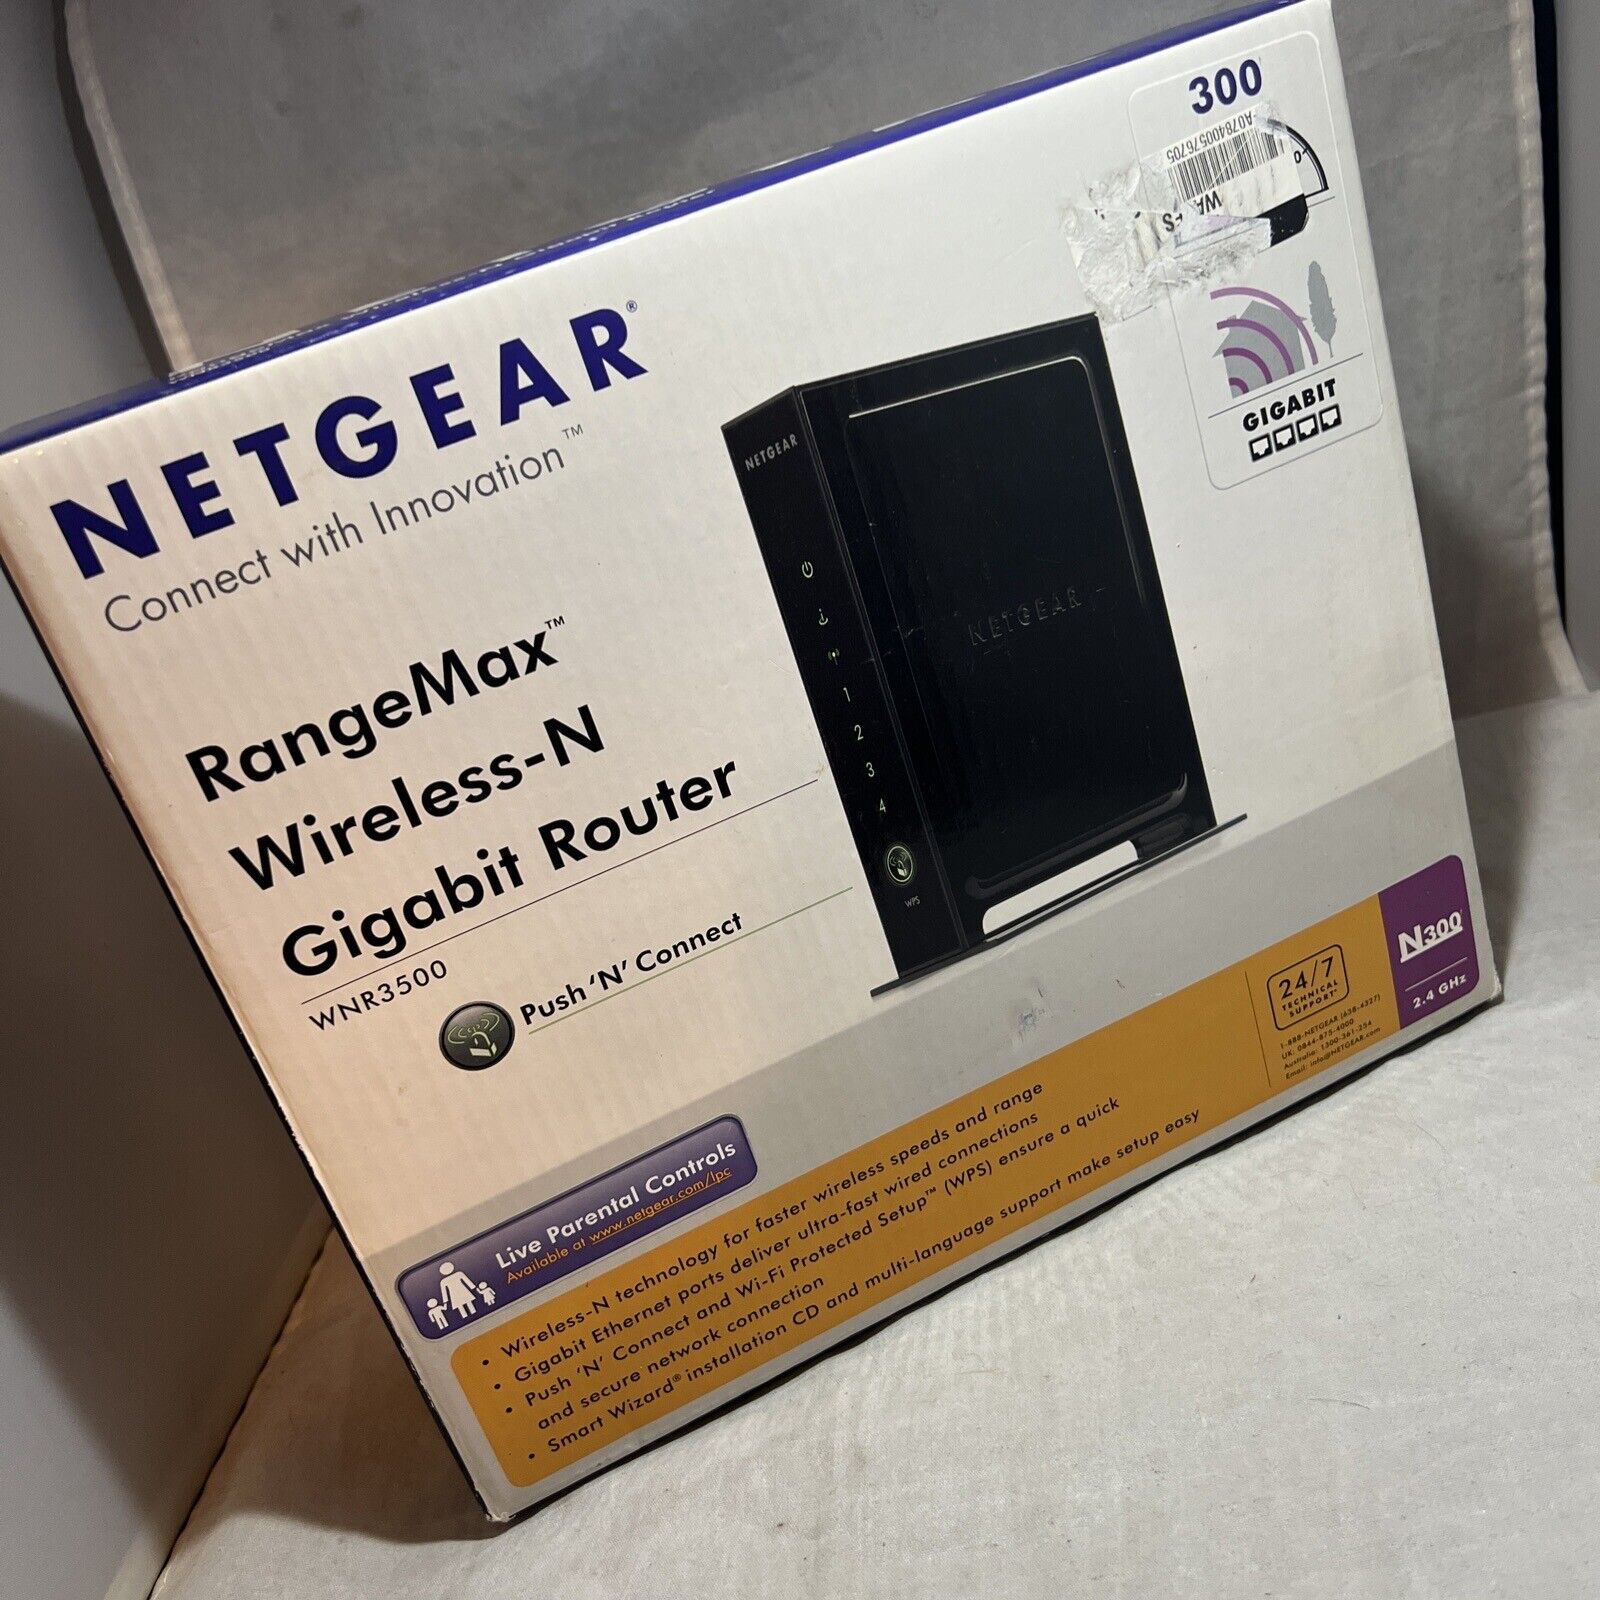 Netgear RangeMax WNR3500 802.11n Wireless LAN/Firewall 4-Port Gigabit Router